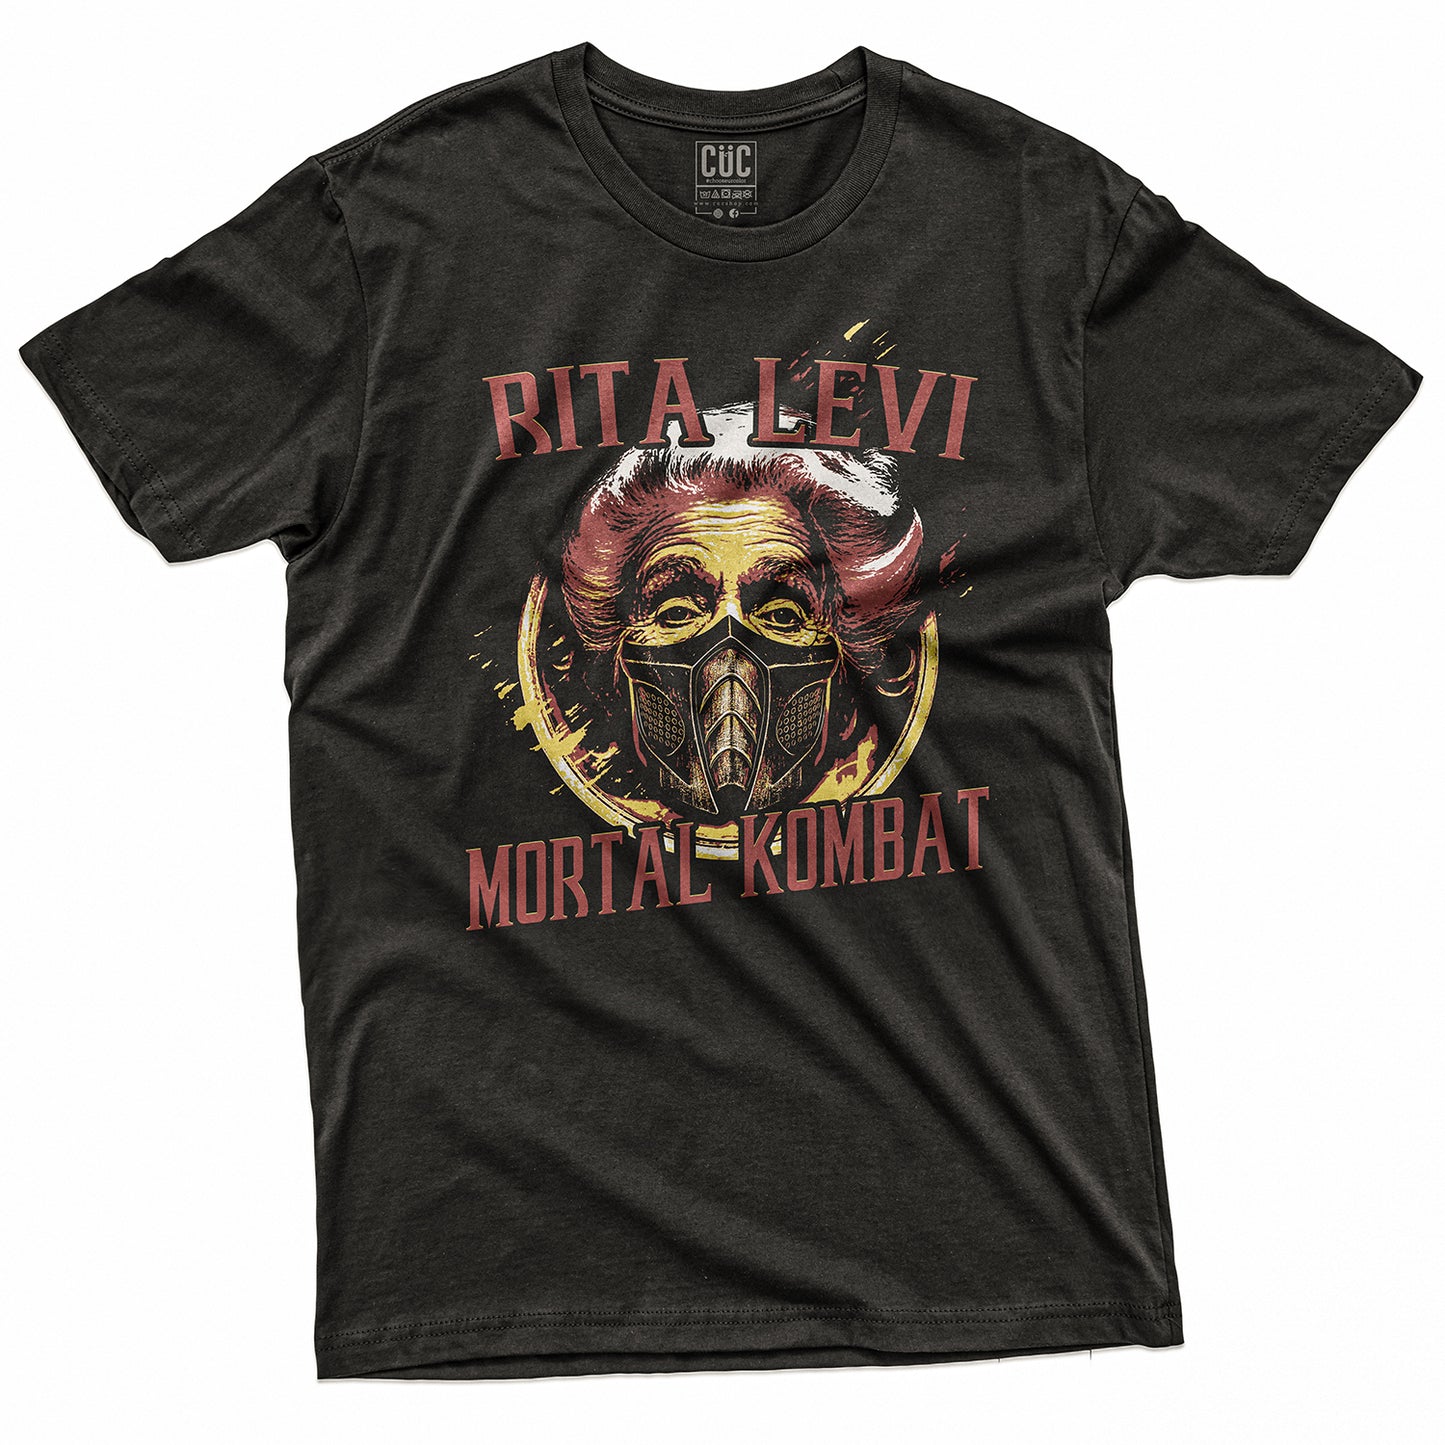 CUC T-Shirt RITA MK - Rita Levi - Mortal Kombat  #chooseurcolor